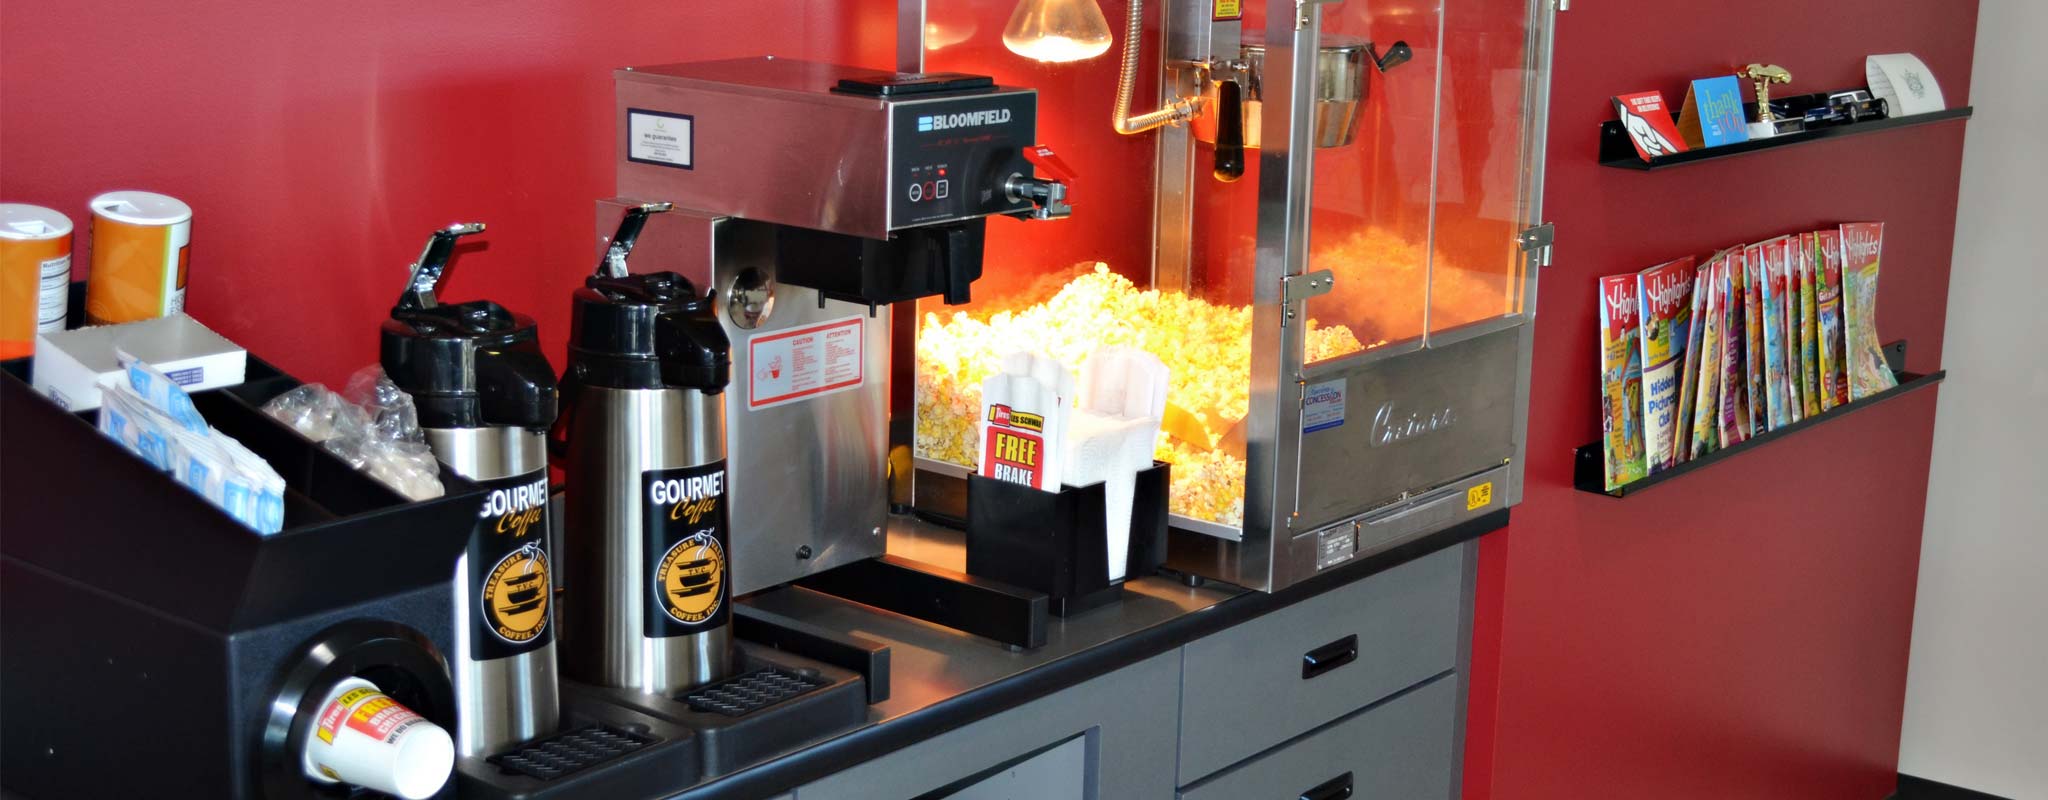 One of many Les Schwab’s signature popcorn machines.